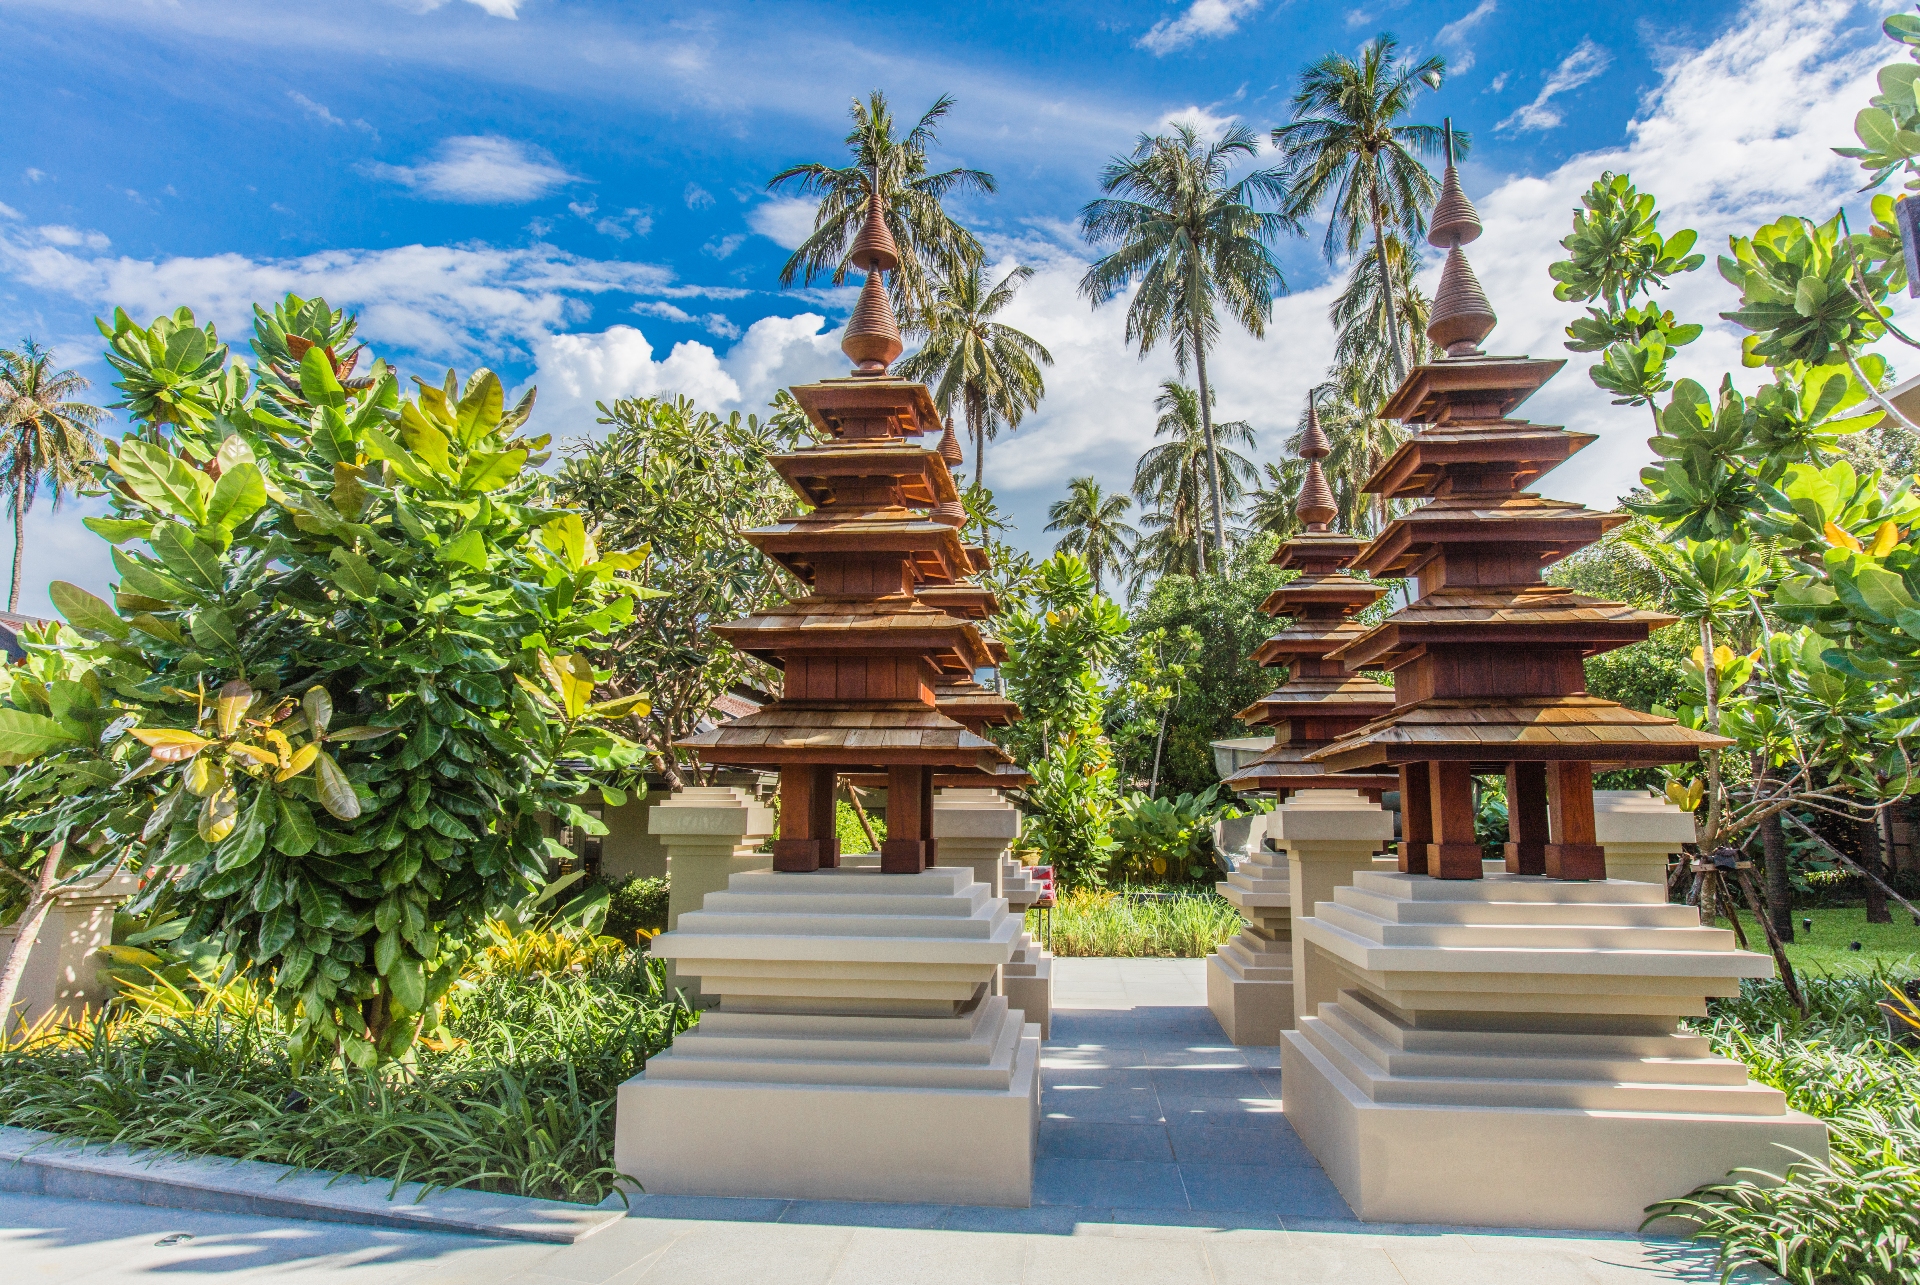 Образцы тайской архитектуры на территории курорта (ANI Private Resorts Thailand)